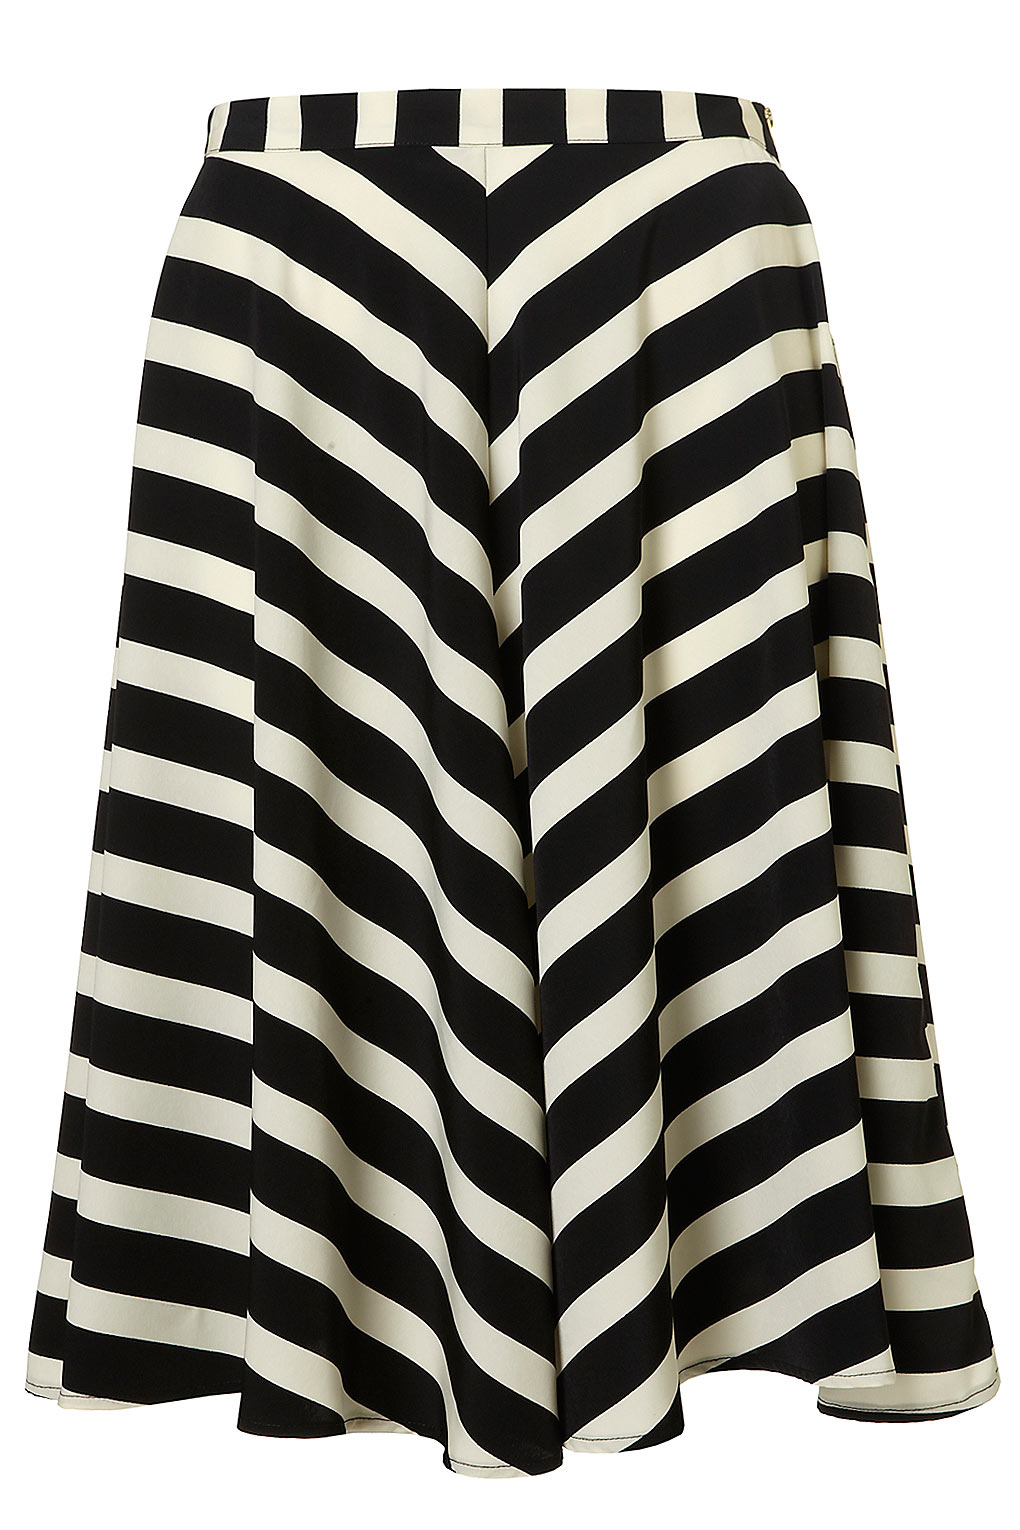 Topshop Stripe Full Circle Skirt in Black | Lyst